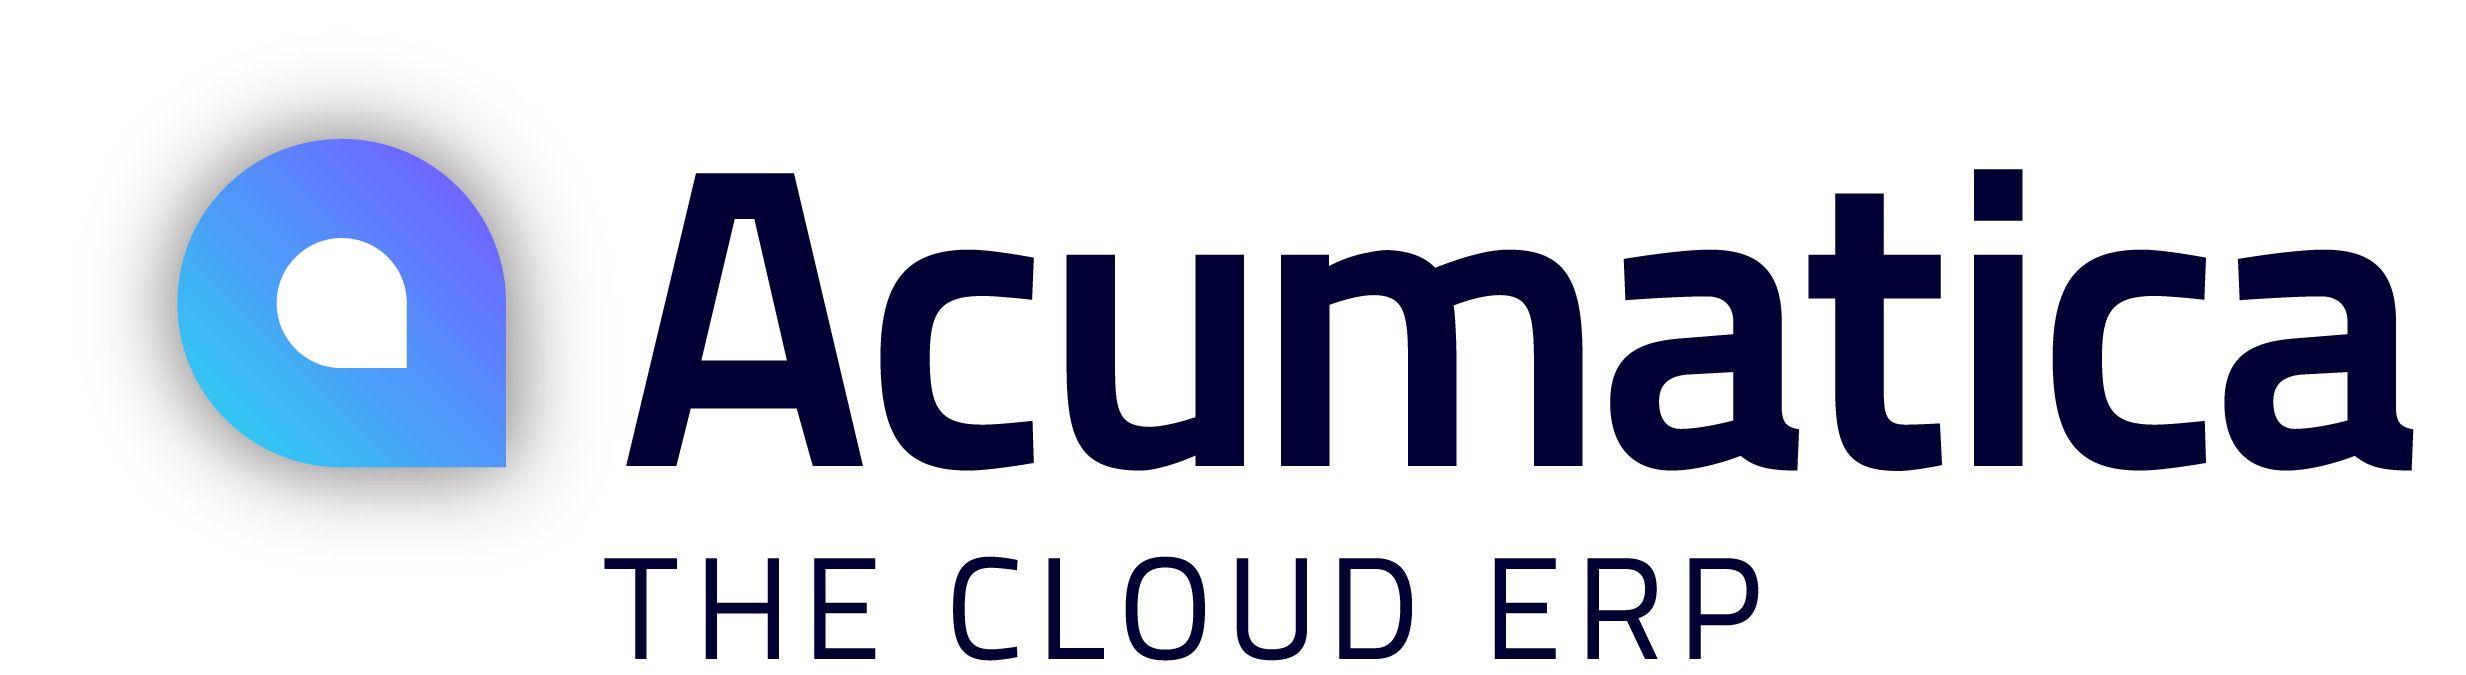 Acumatica Logo - Acumatica Consultant: Cloud Based ERP, Support Training